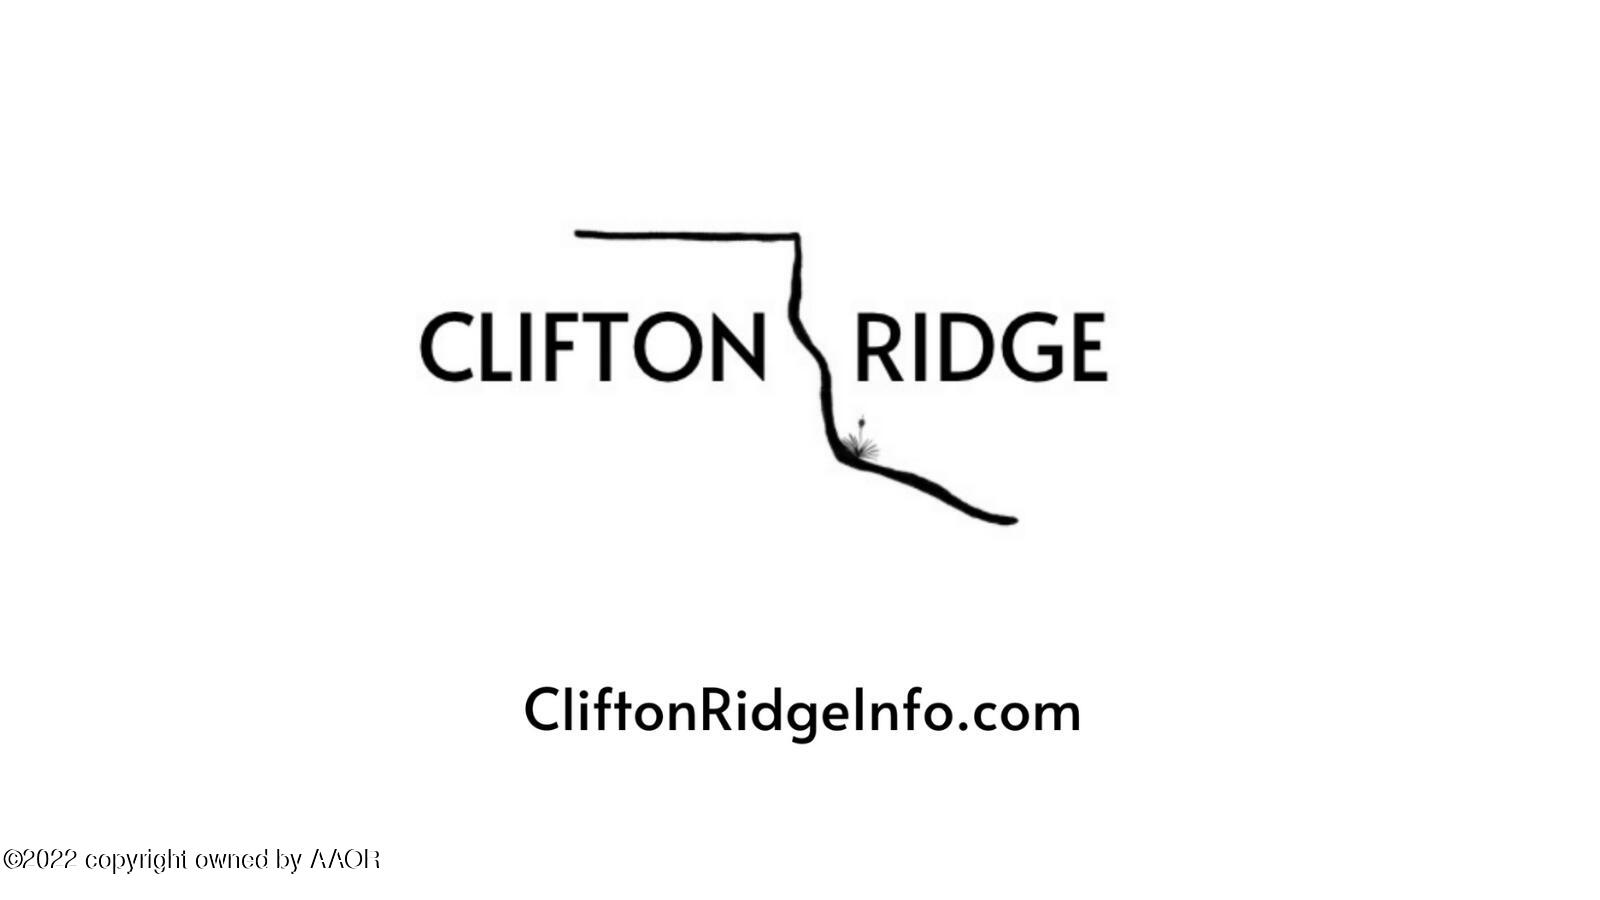 CLIFTON RIDGE 001